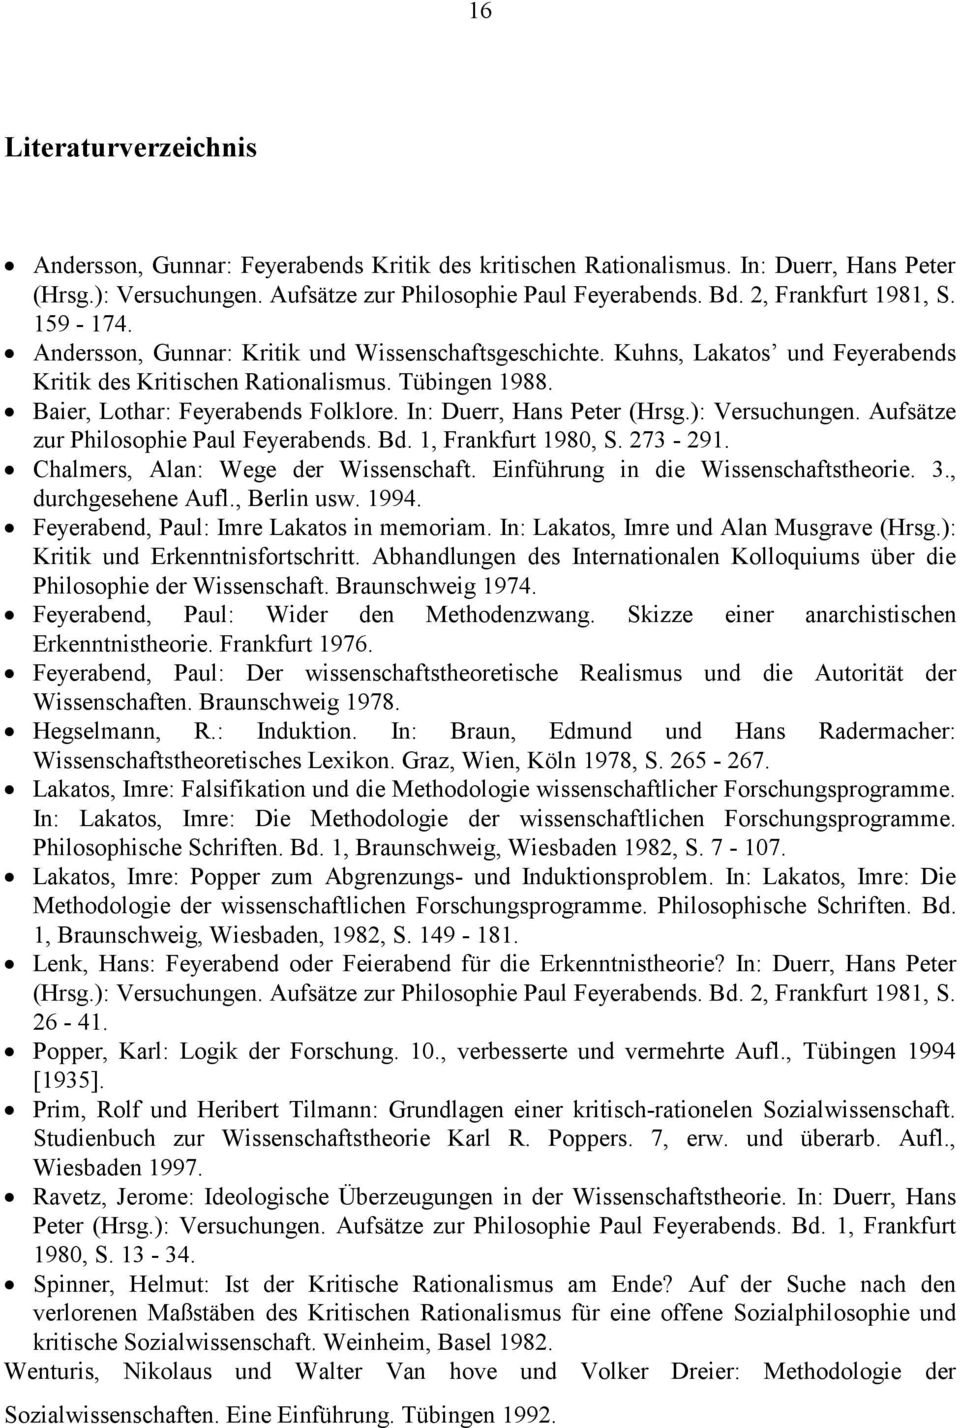 Baier, Lothar: Feyerabends Folklore. In: Duerr, Hans Peter (Hrsg.): Versuchungen. Aufsätze zur Philosophie Paul Feyerabends. Bd. 1, Frankfurt 1980, S. 273-291. Chalmers, Alan: Wege der Wissenschaft.